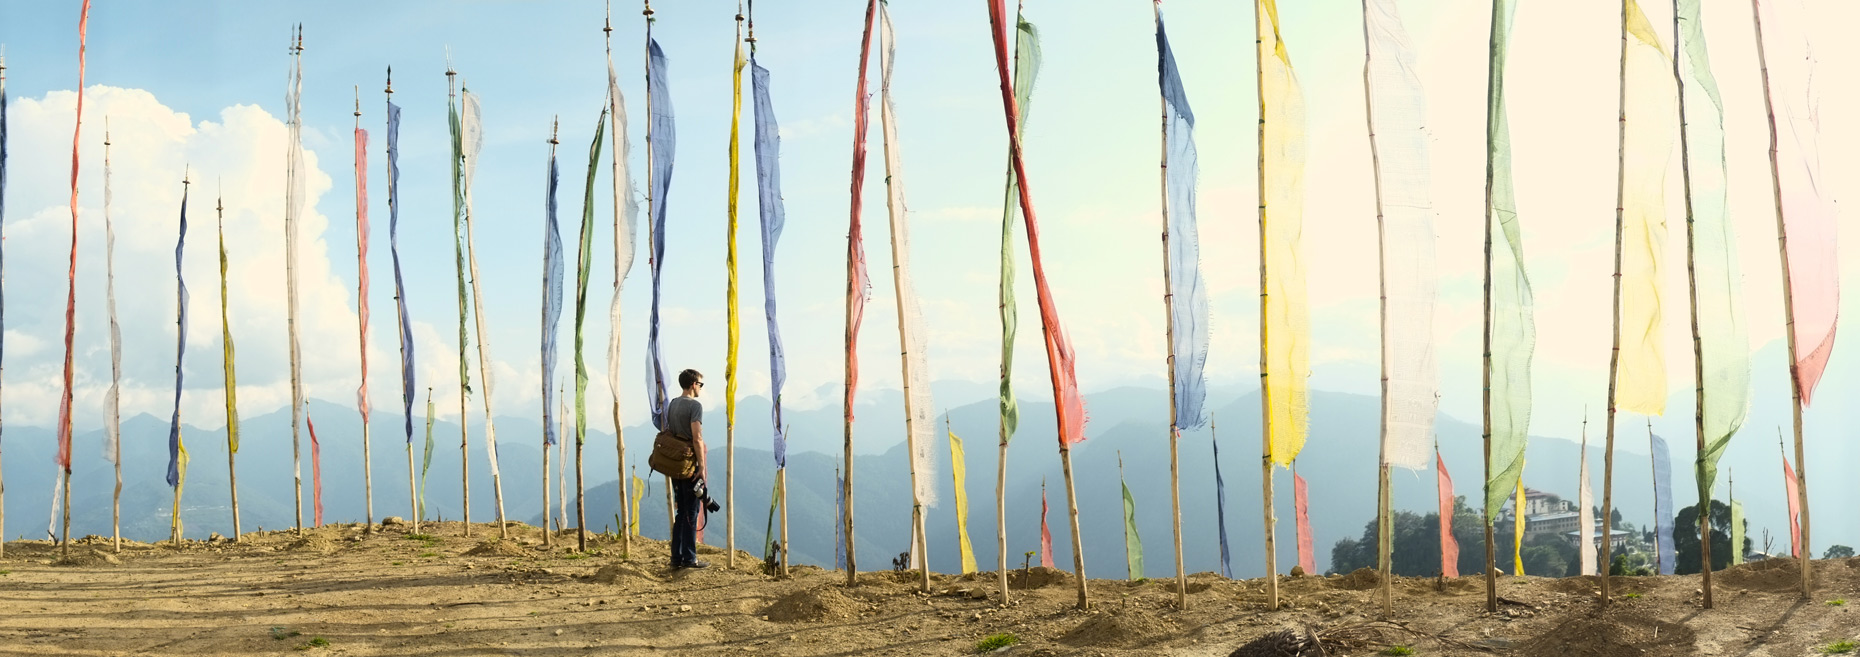 Cerimonial flags on ridge in Bhutan/Steve Mason Photography